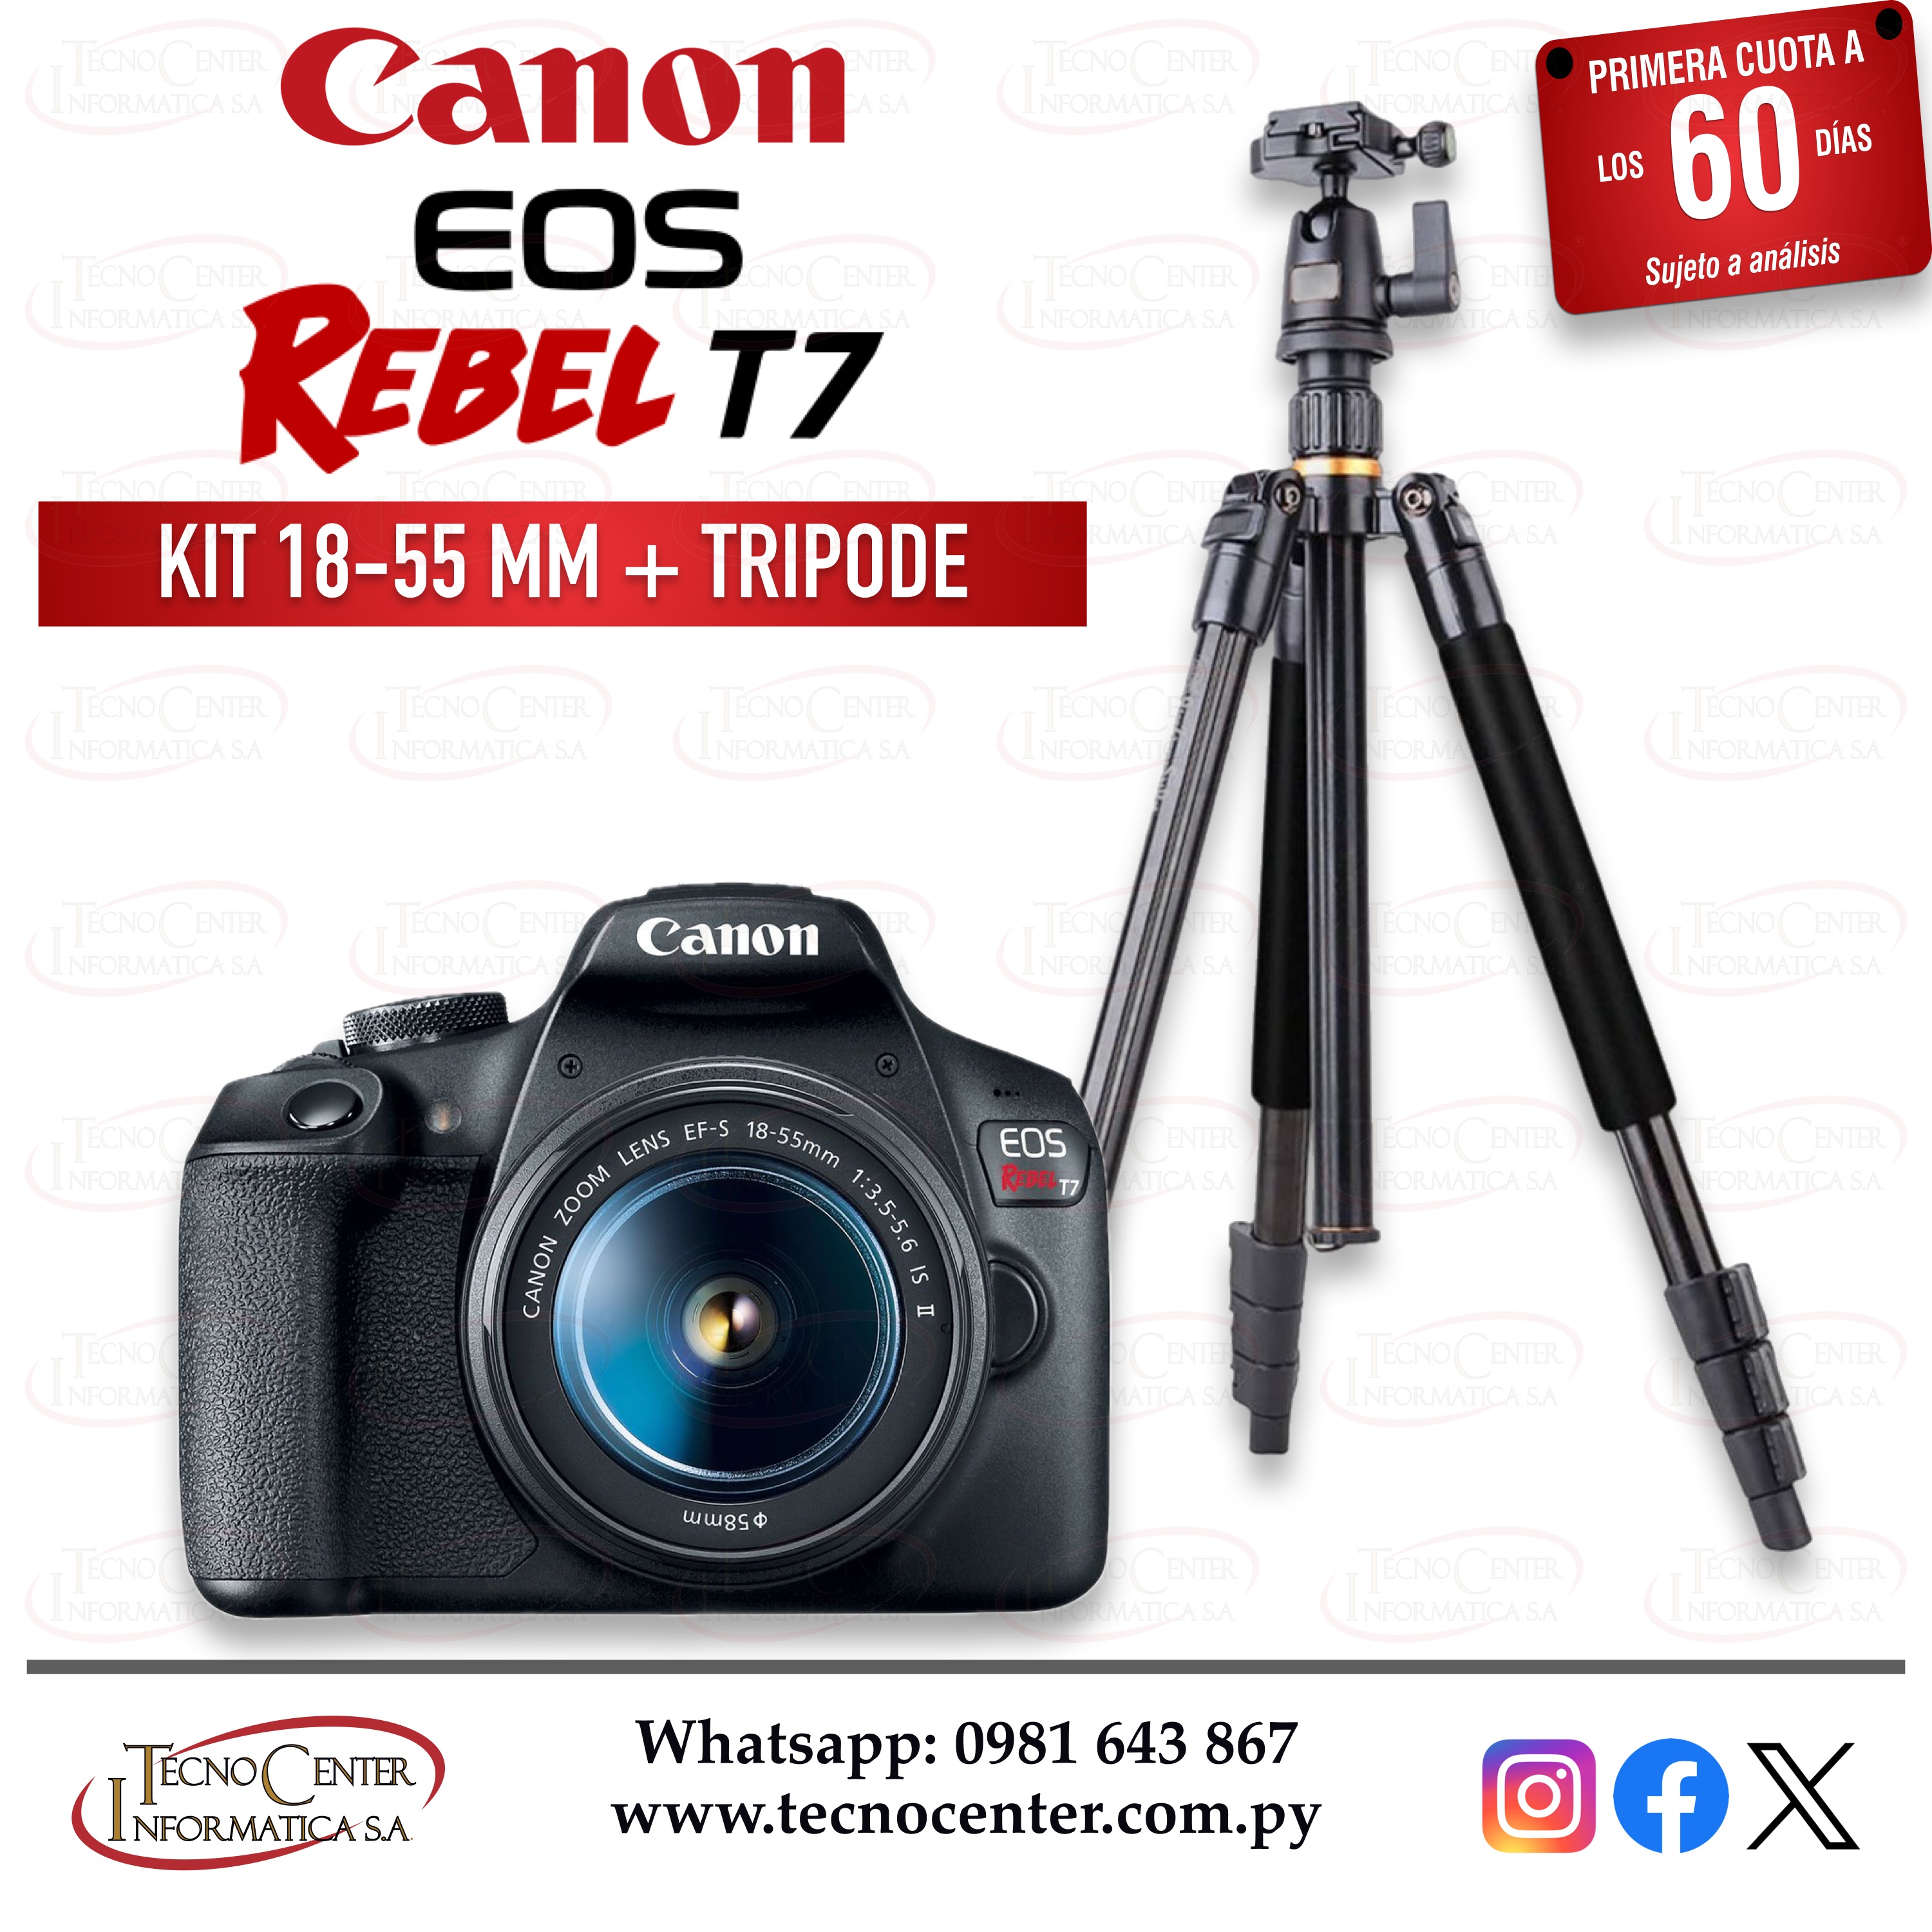 Cámara Canon EOS Rebel T7 Kit 18-55mm. + Trípode